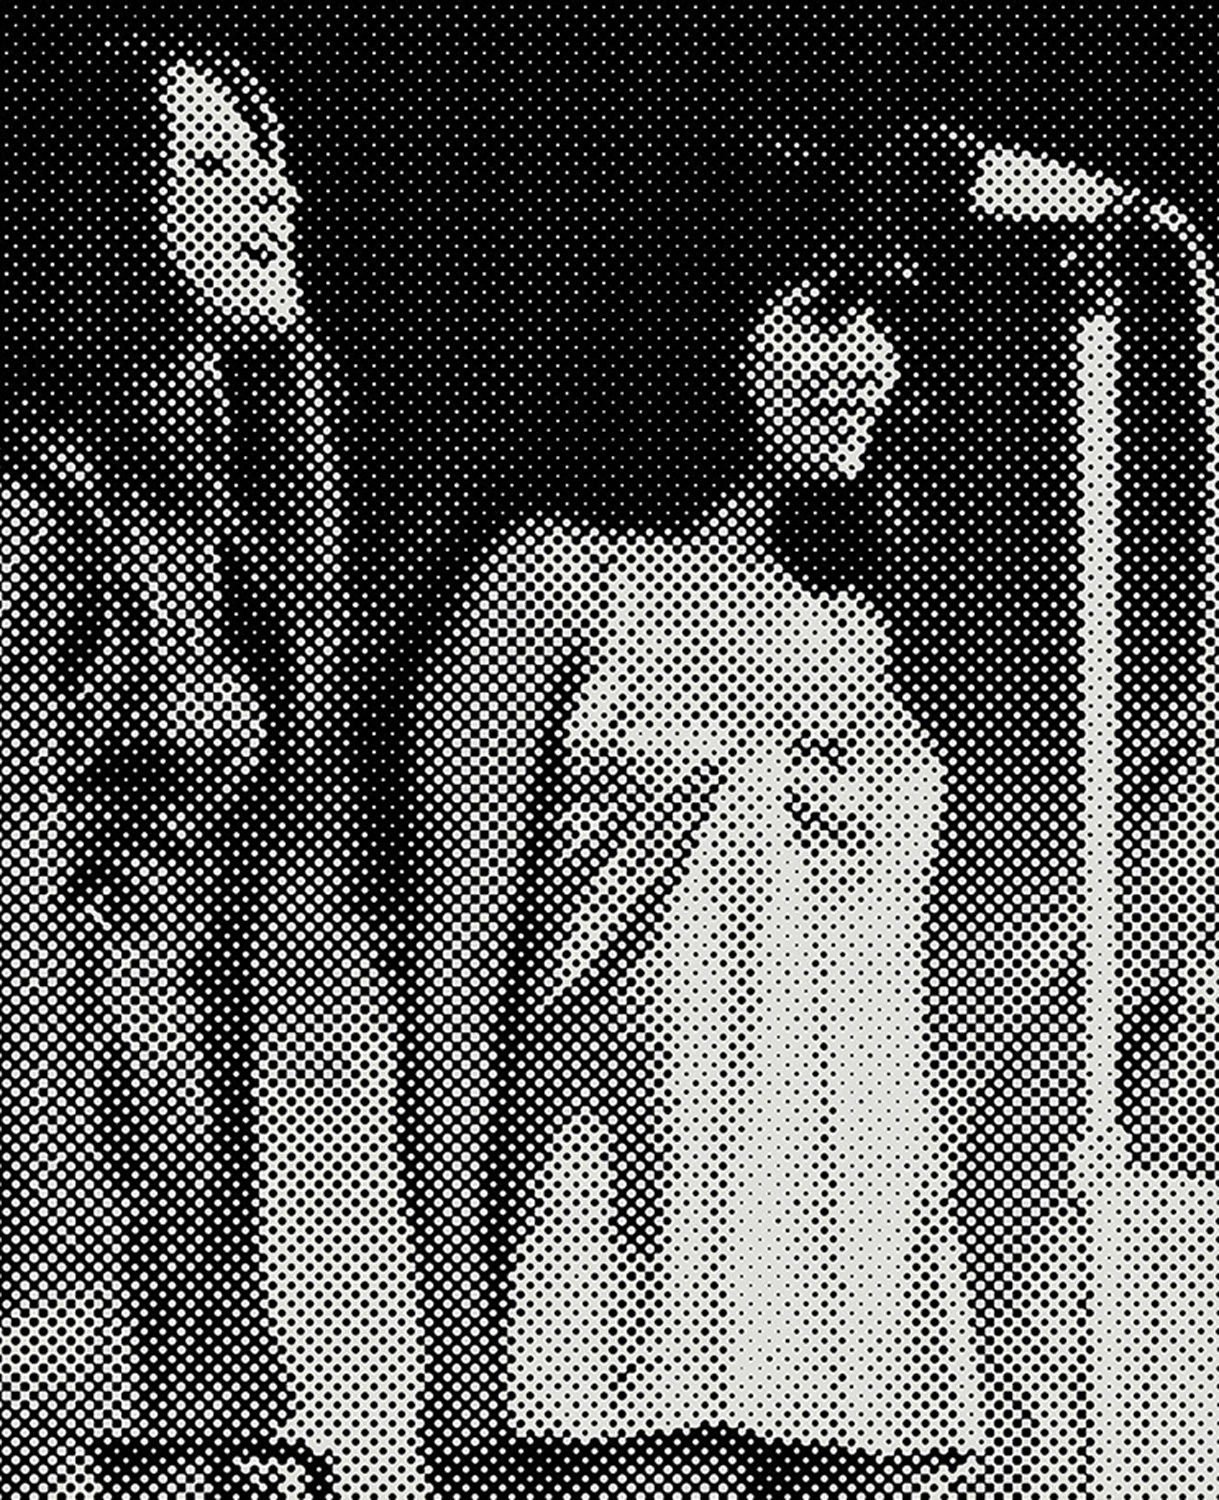 05-1971 [Entertainers at the Aussie Badcoe Club Vung Tau, Vietnam], 2018 - Additional view